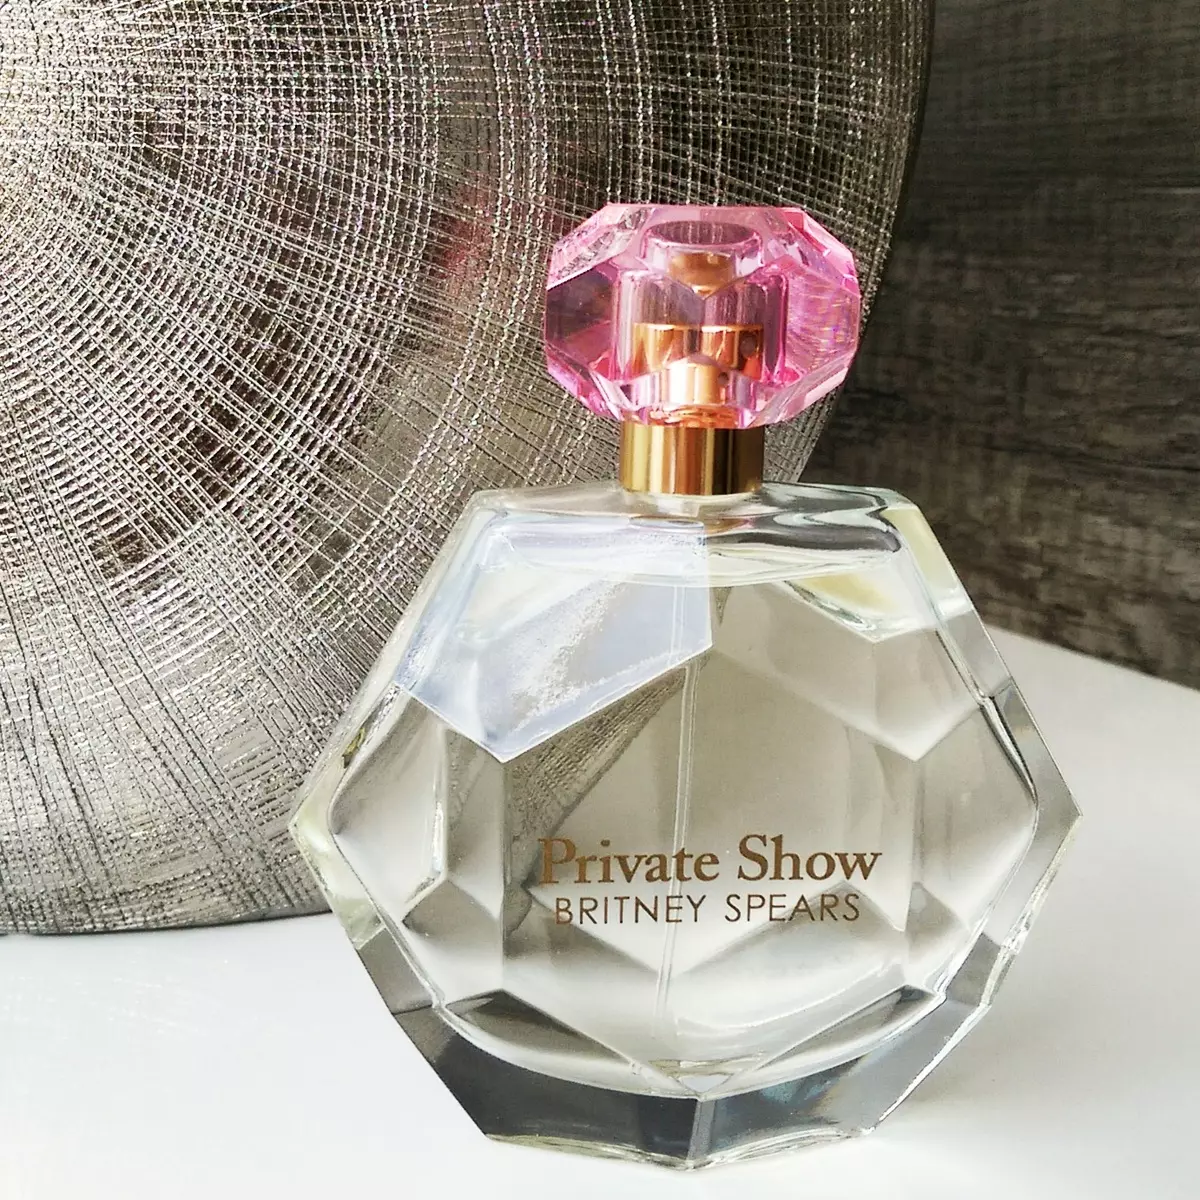 Perfuy Britney Spears: perfume e vaso sanitário, fantasia, fantasia da meia-noite e outros sabores da marca 25313_3